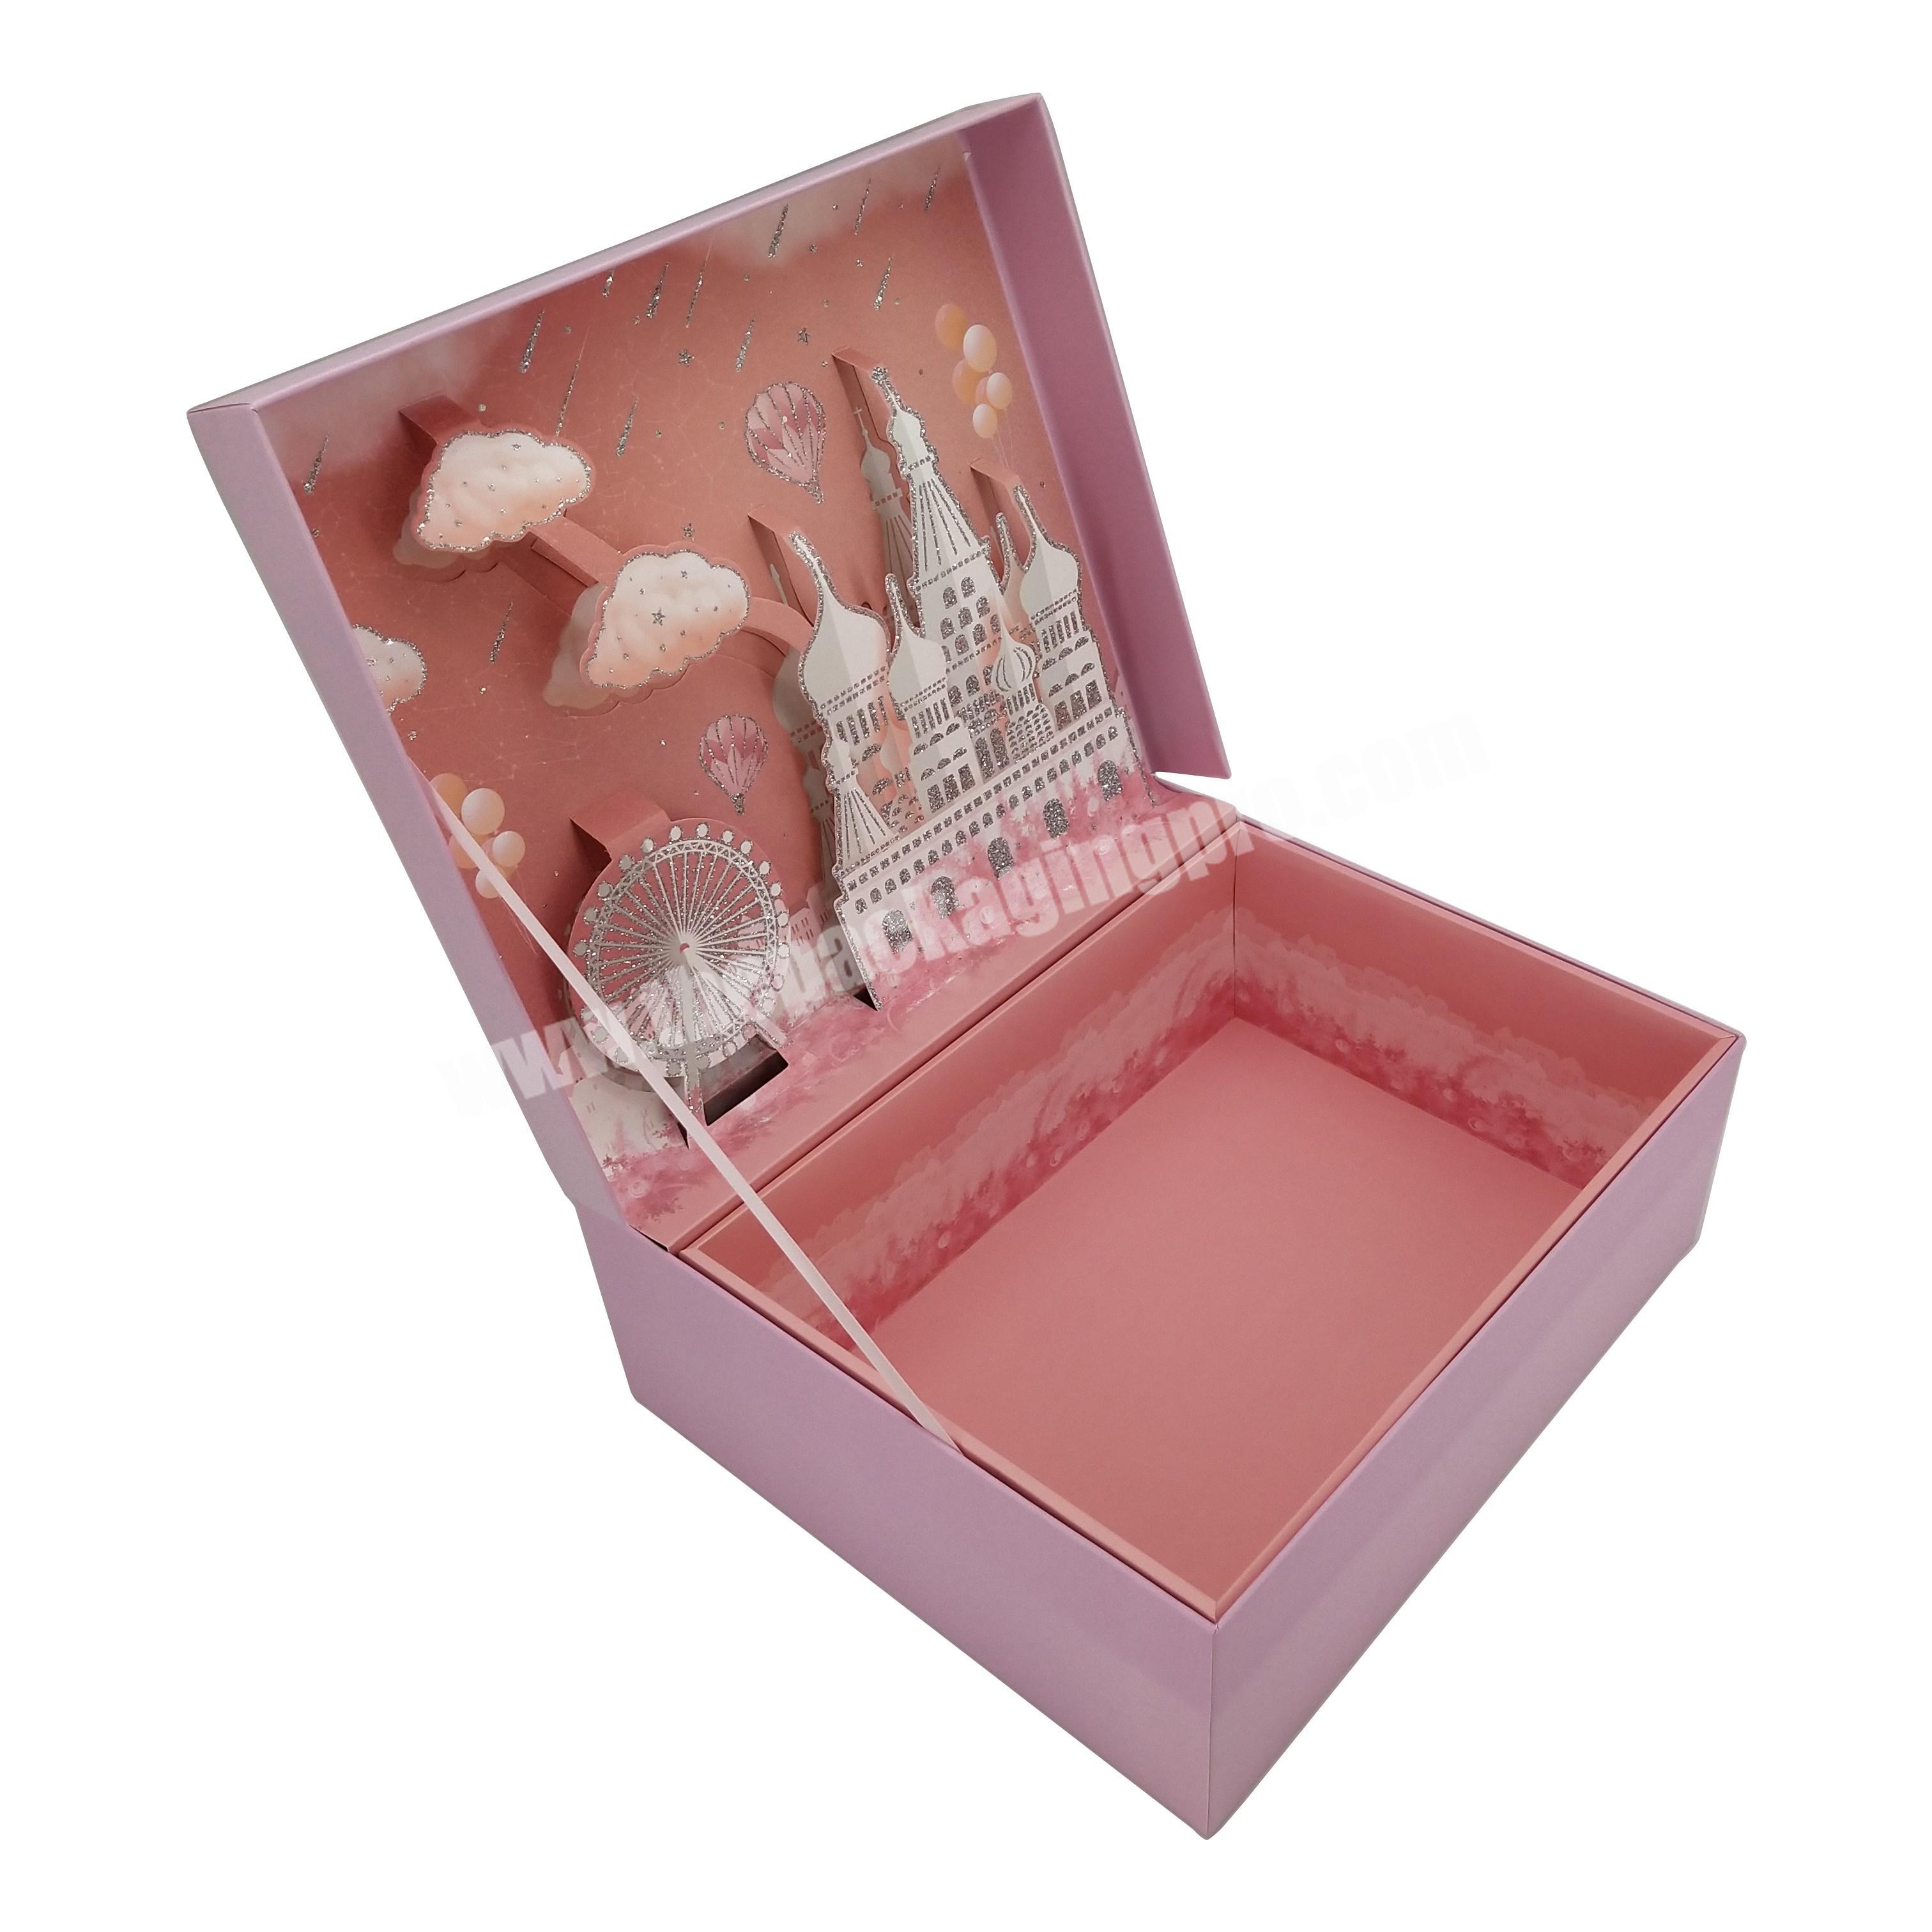 Creative pretty surprise gift box for girlfriend on Valentine's Day